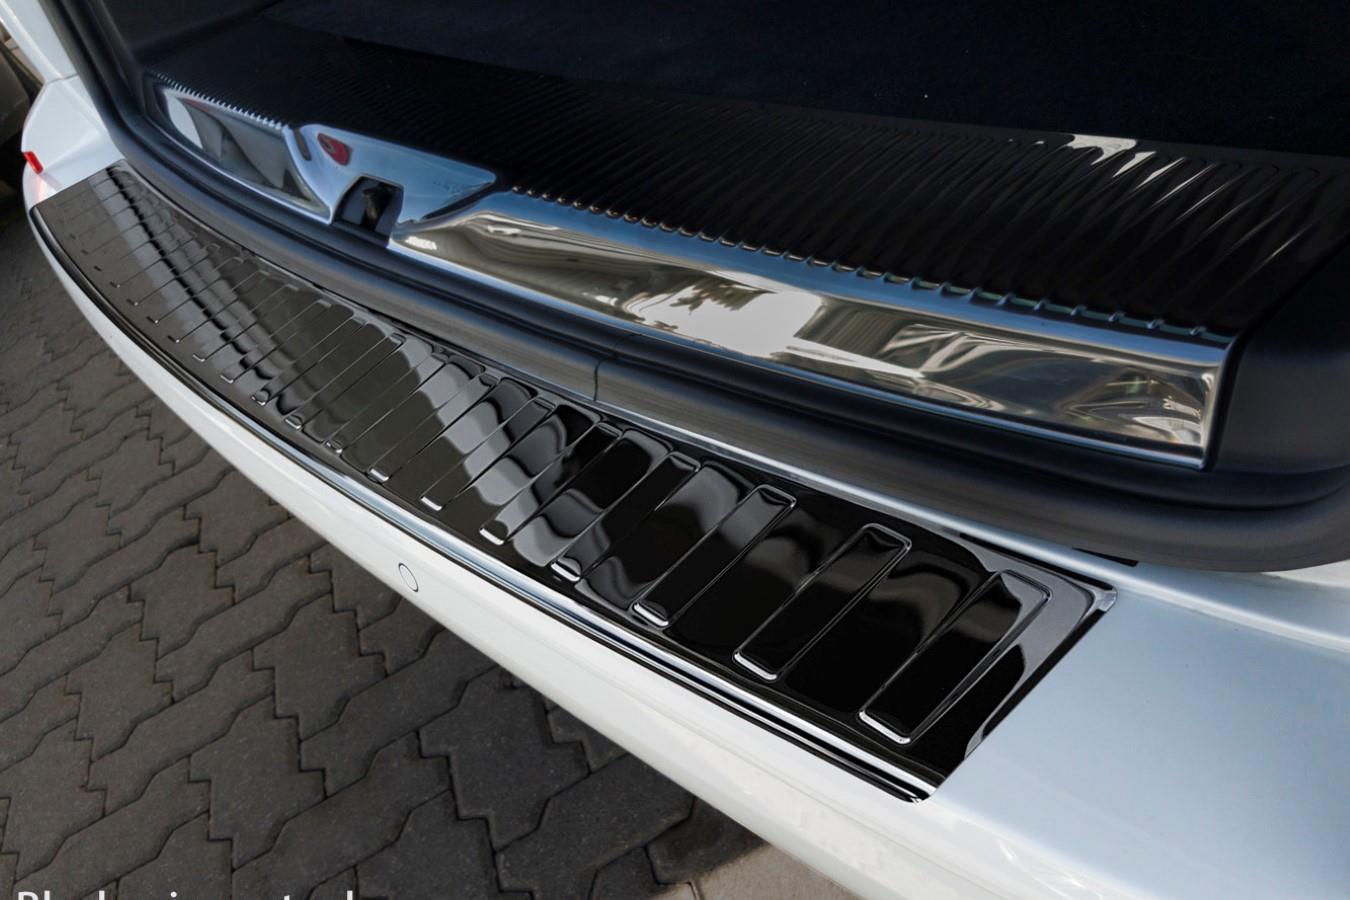 https://www.carparts-expert.com/images/stories/virtuemart/product/vw14t6bp-volkswagen-transporter-t6-2015-rear-bumper-protector-stainless-steel-high-gloss-black-1.jpg